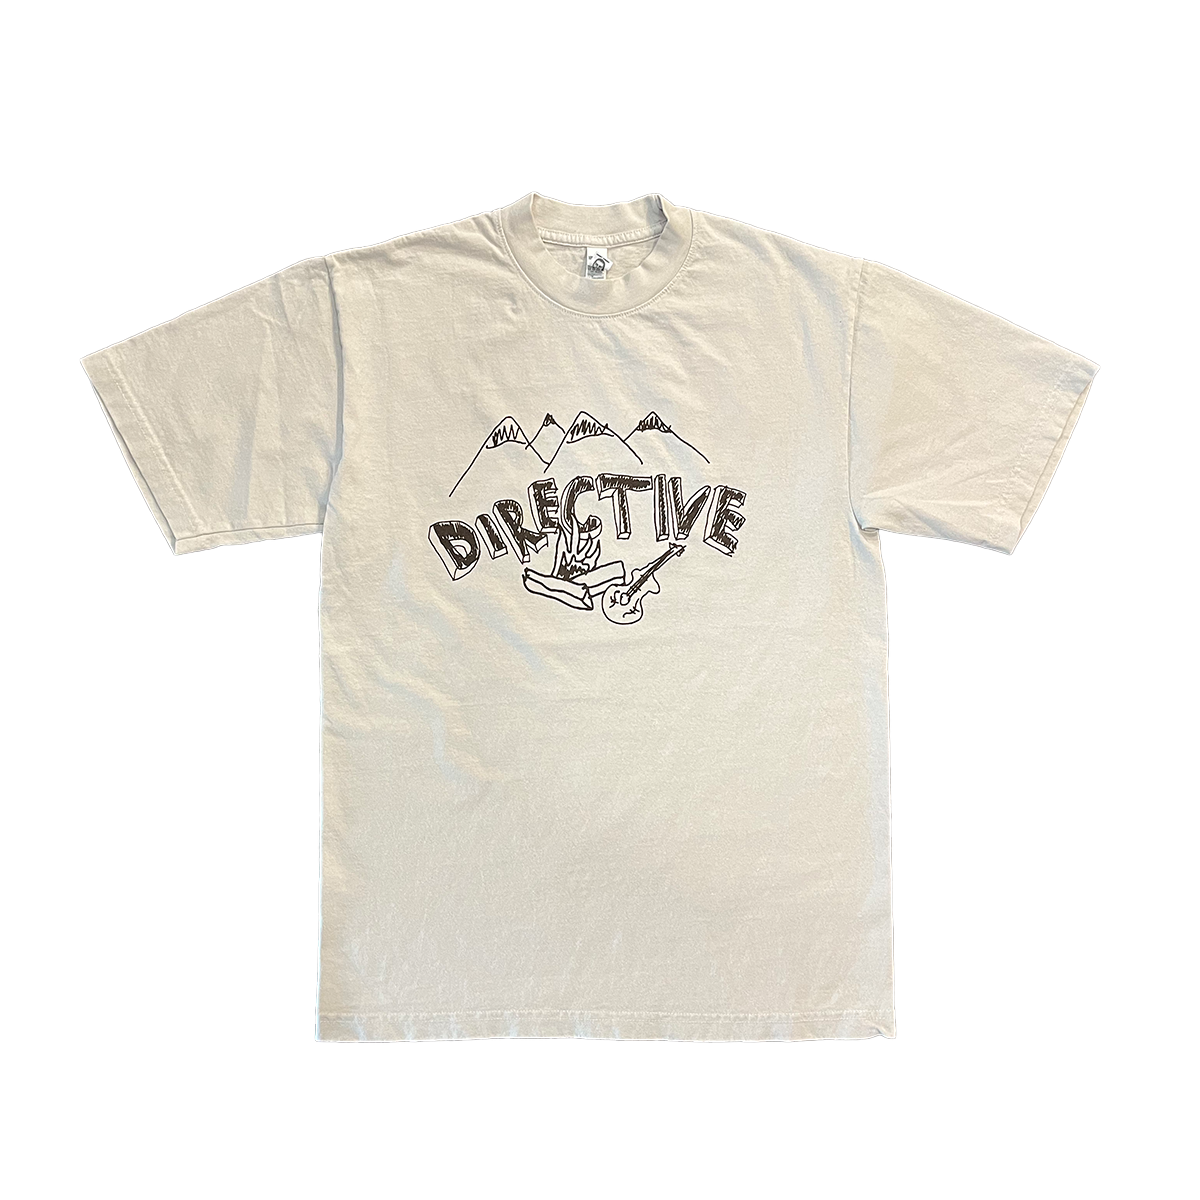 Directive Camp Kids T-Shirt - Cement